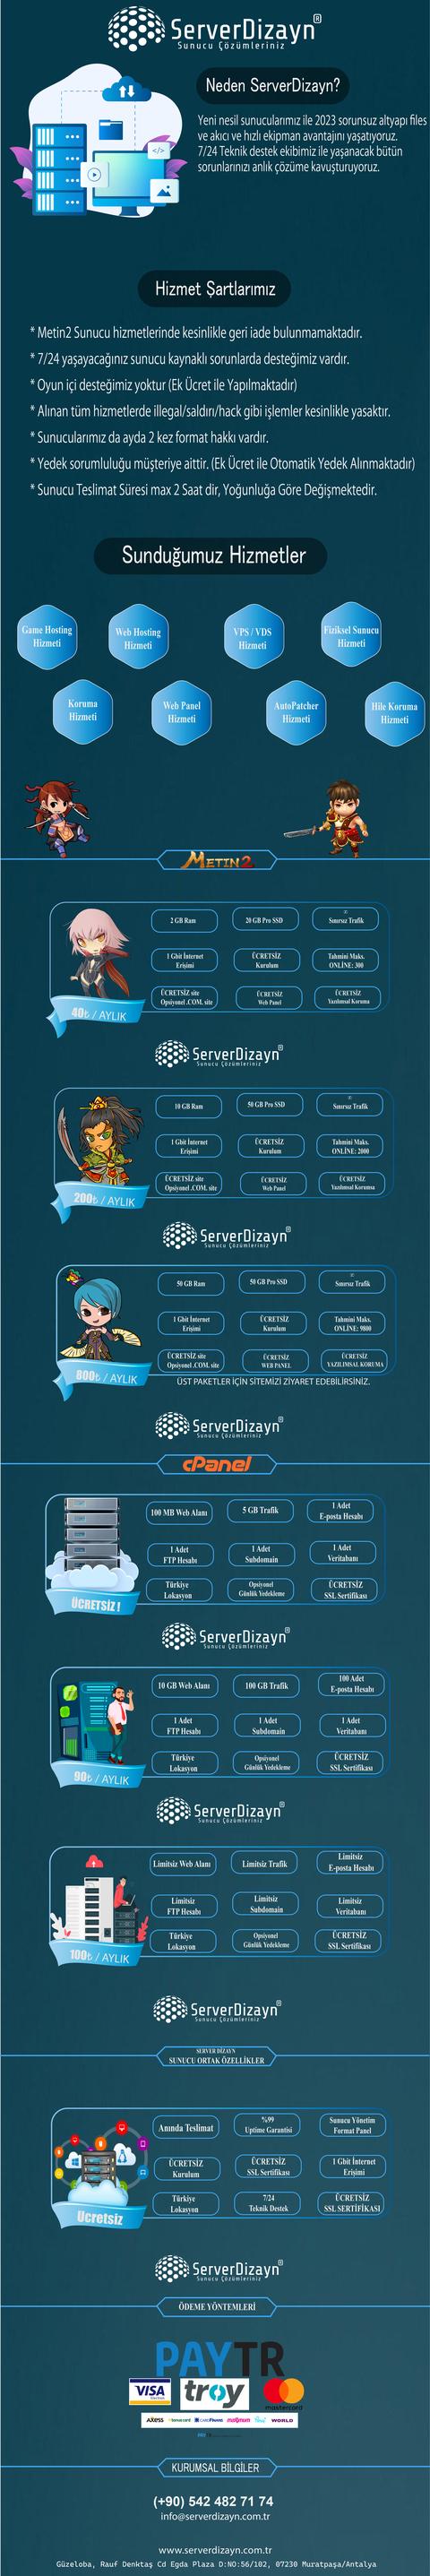 ServerDizayn.com.tr | Ücretsiz Hosting - Performans Canavarı VDS Sunucular - Metin2 Sunucuları